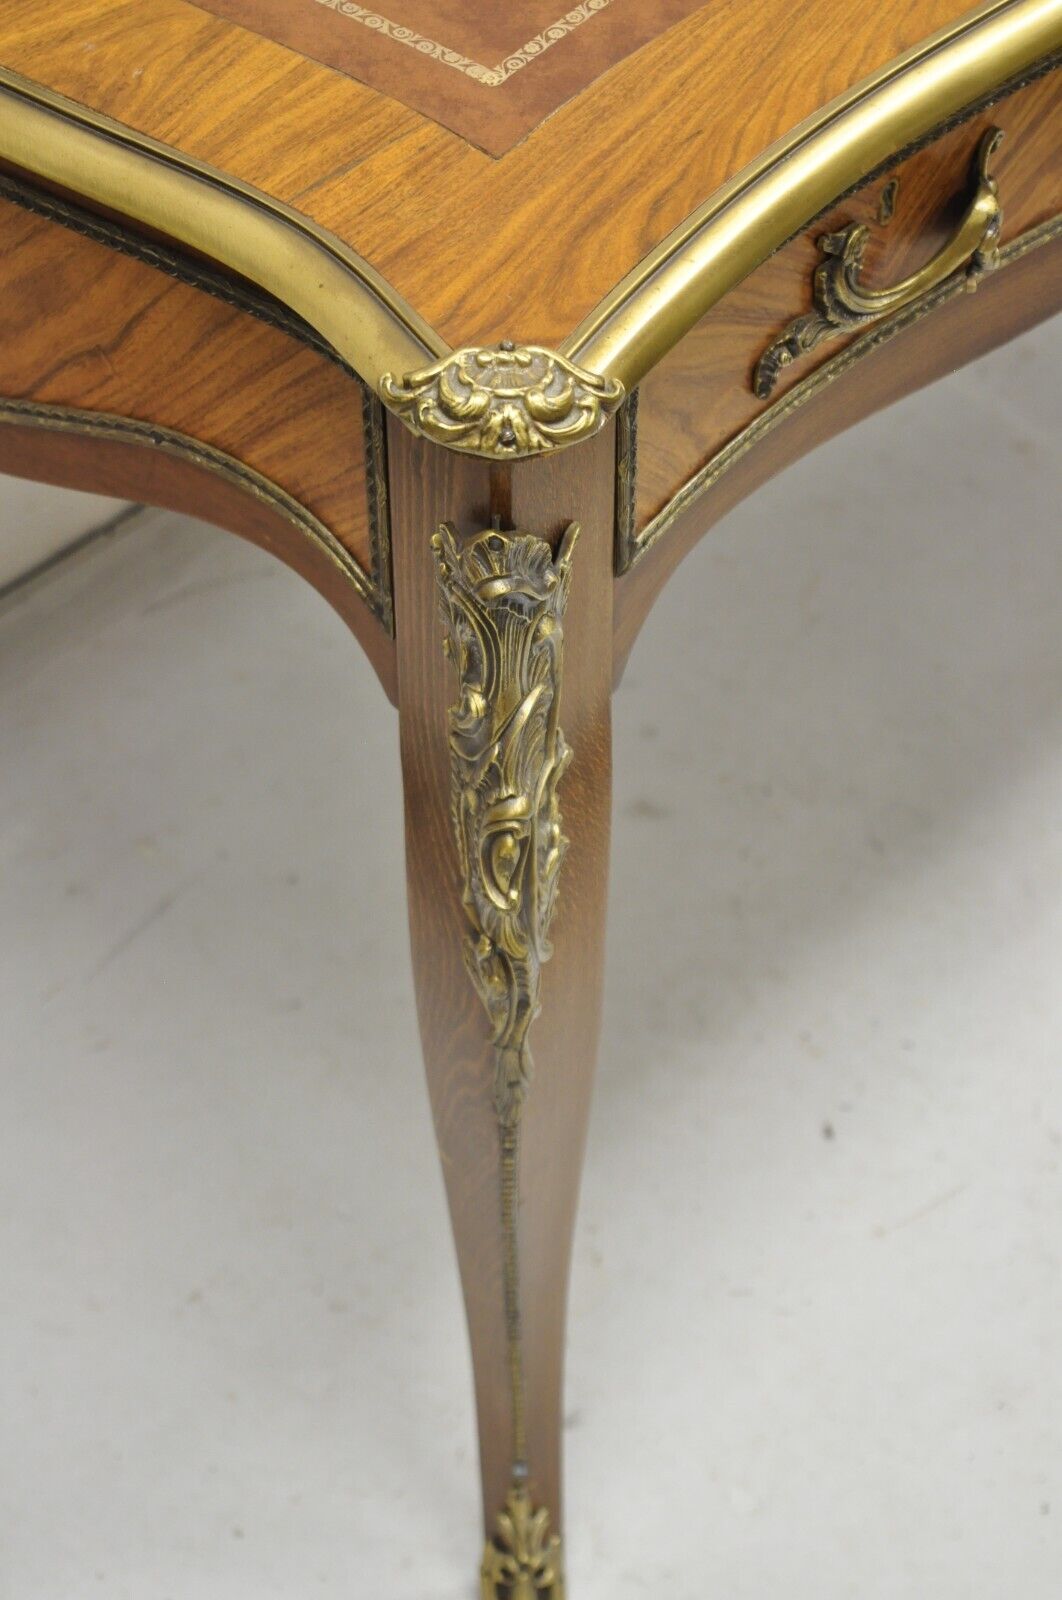 Vintage French Louis XV Style Walnut Leather Top Bronze Ormolu Writing Desk